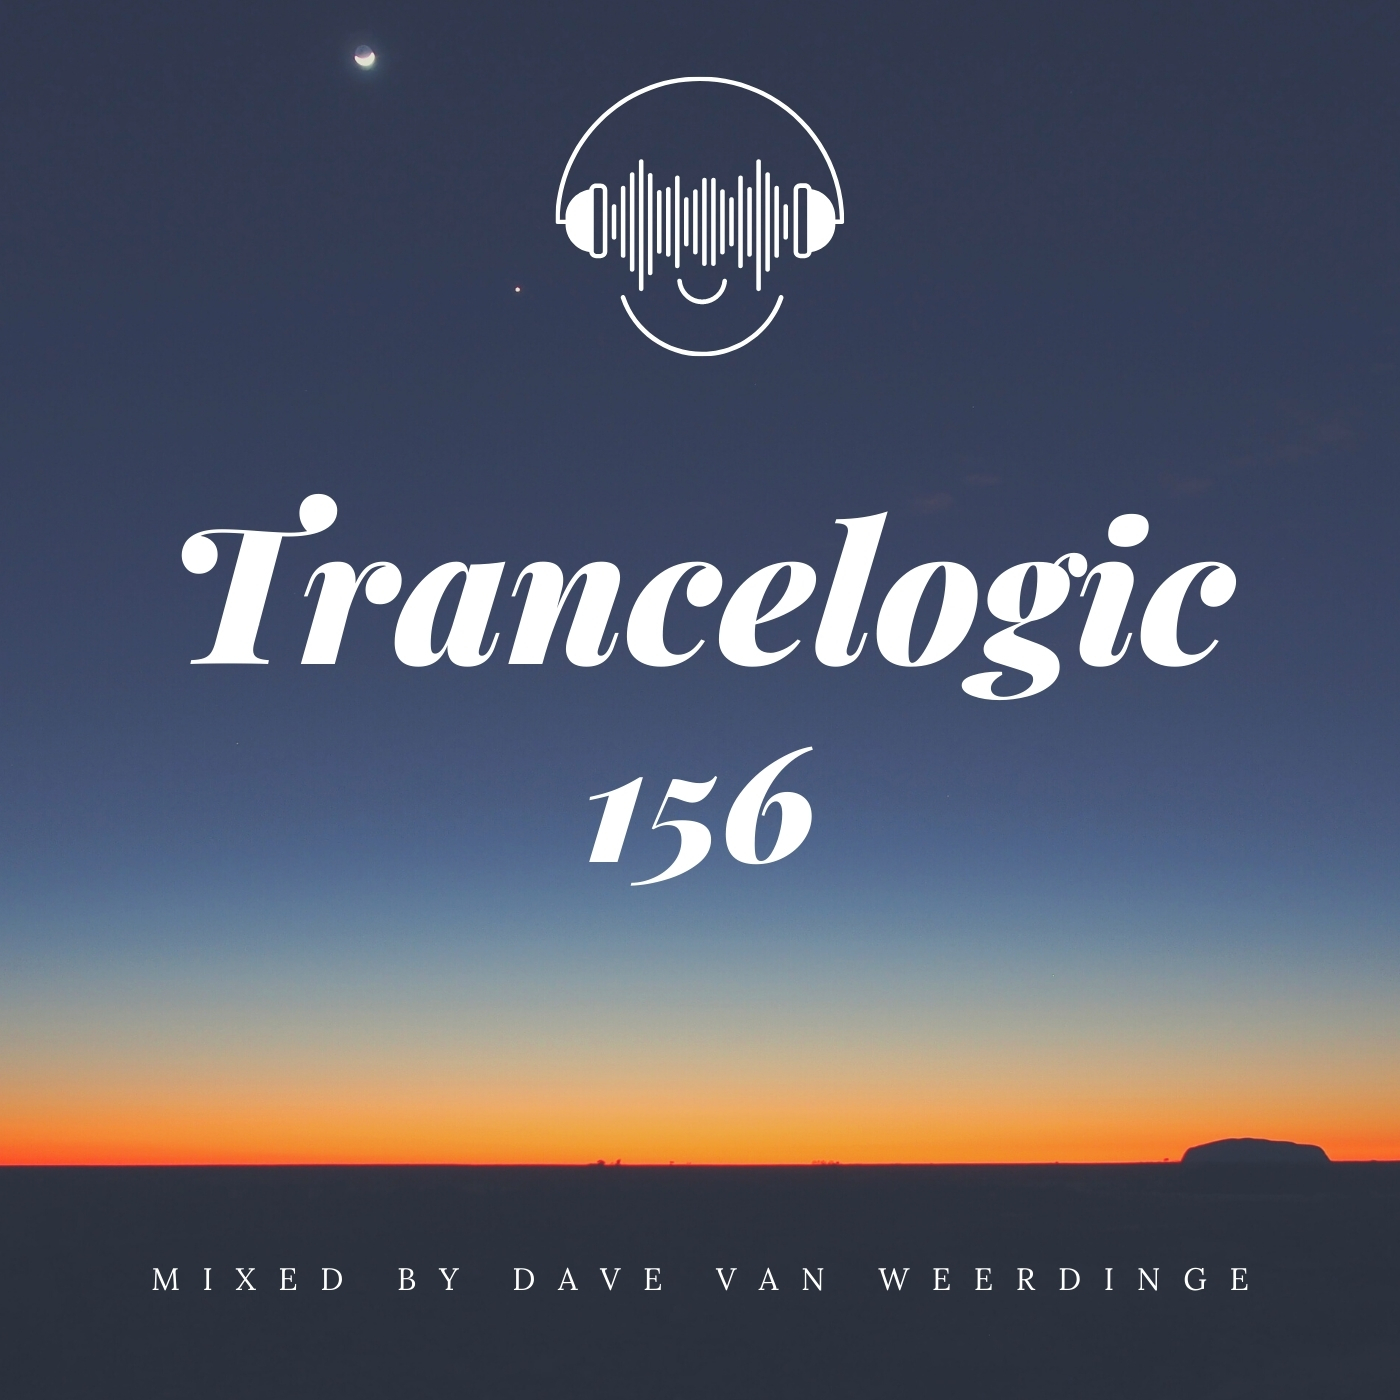 Trancelogic 156 by Dave van Weerdinge